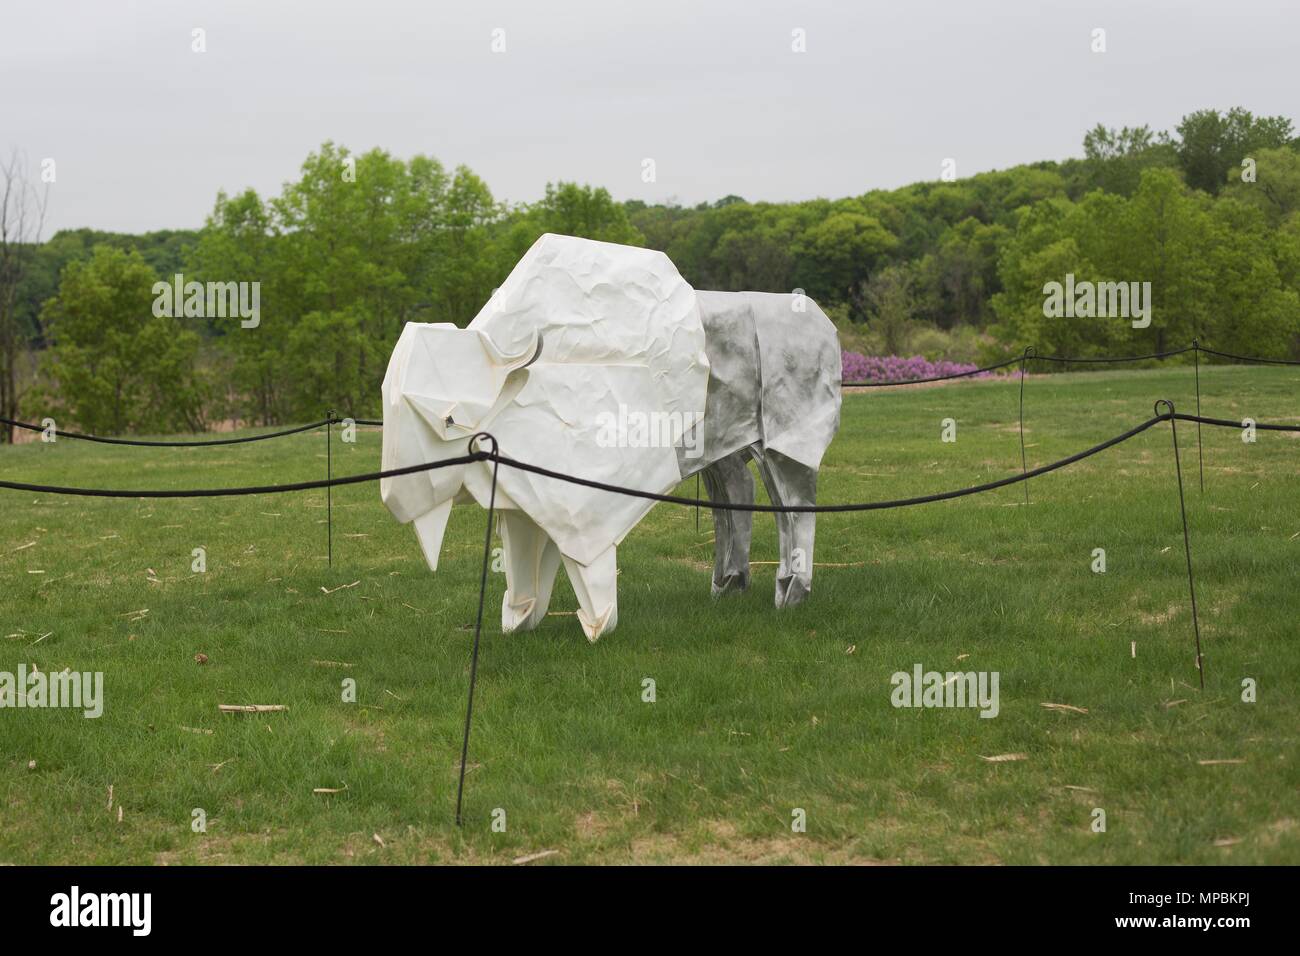 'Blanco' de bisonte, una escultura por Kevin cuadro, en la Minnesota Landscape Arboretum fuera de Minneapolis, en Chaska, Minnesota, USA. Foto de stock